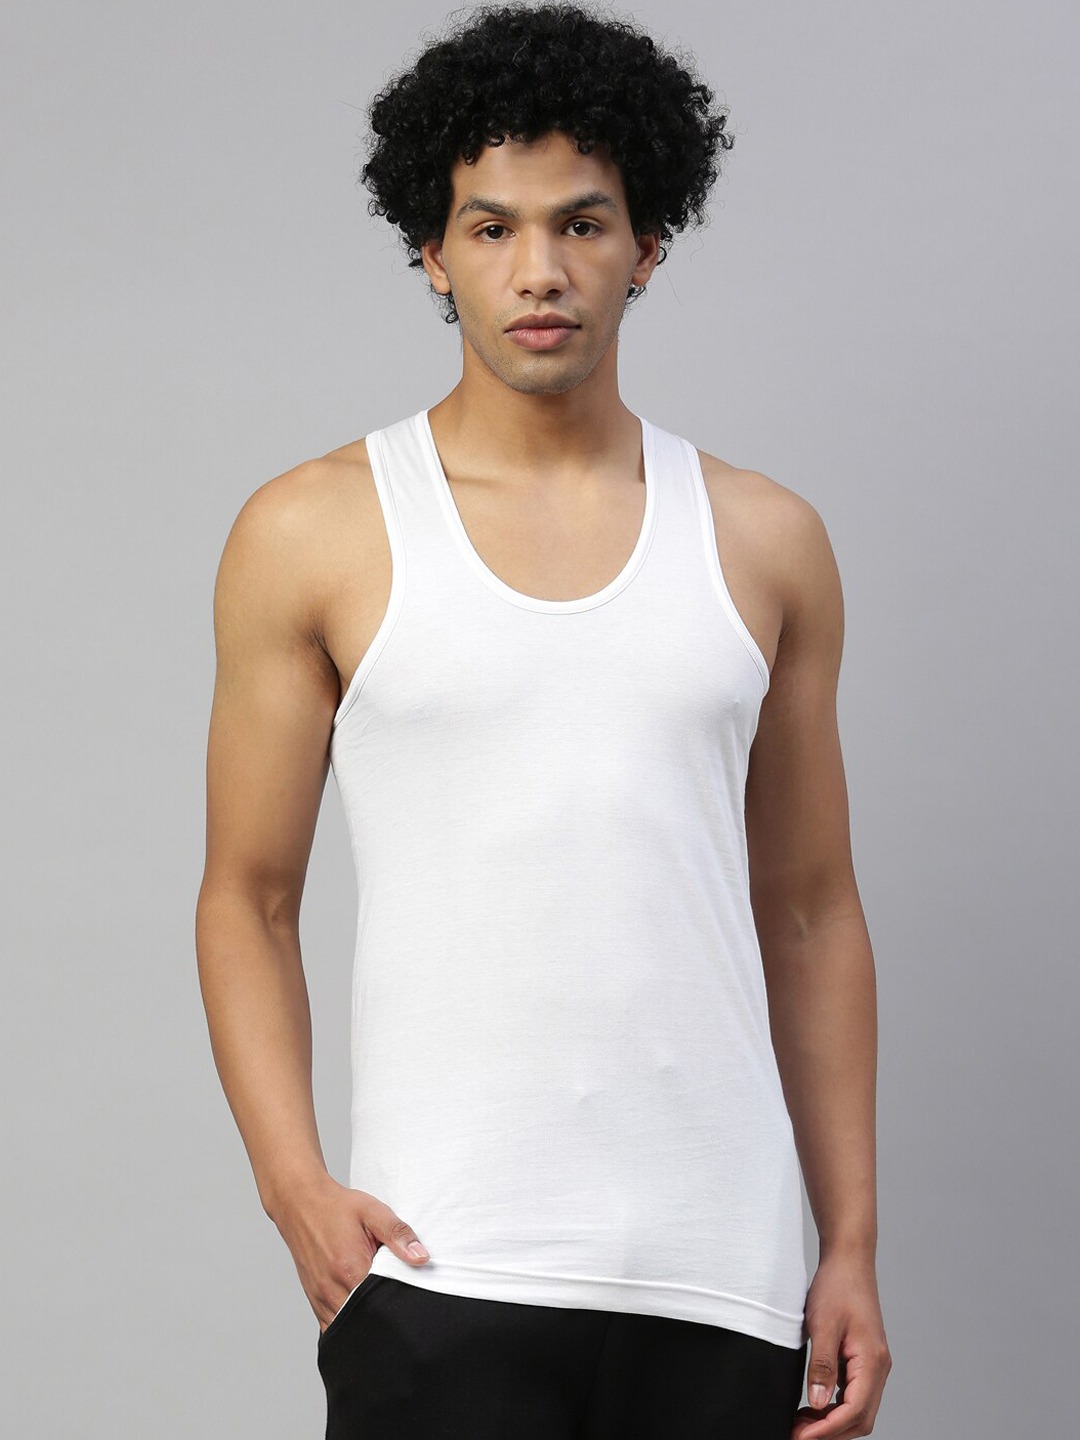 Clothing Innerwear Vests | DIXCY SCOTT MAXIMUS Men White Pure Cotton Innerwear Vests - RB31567